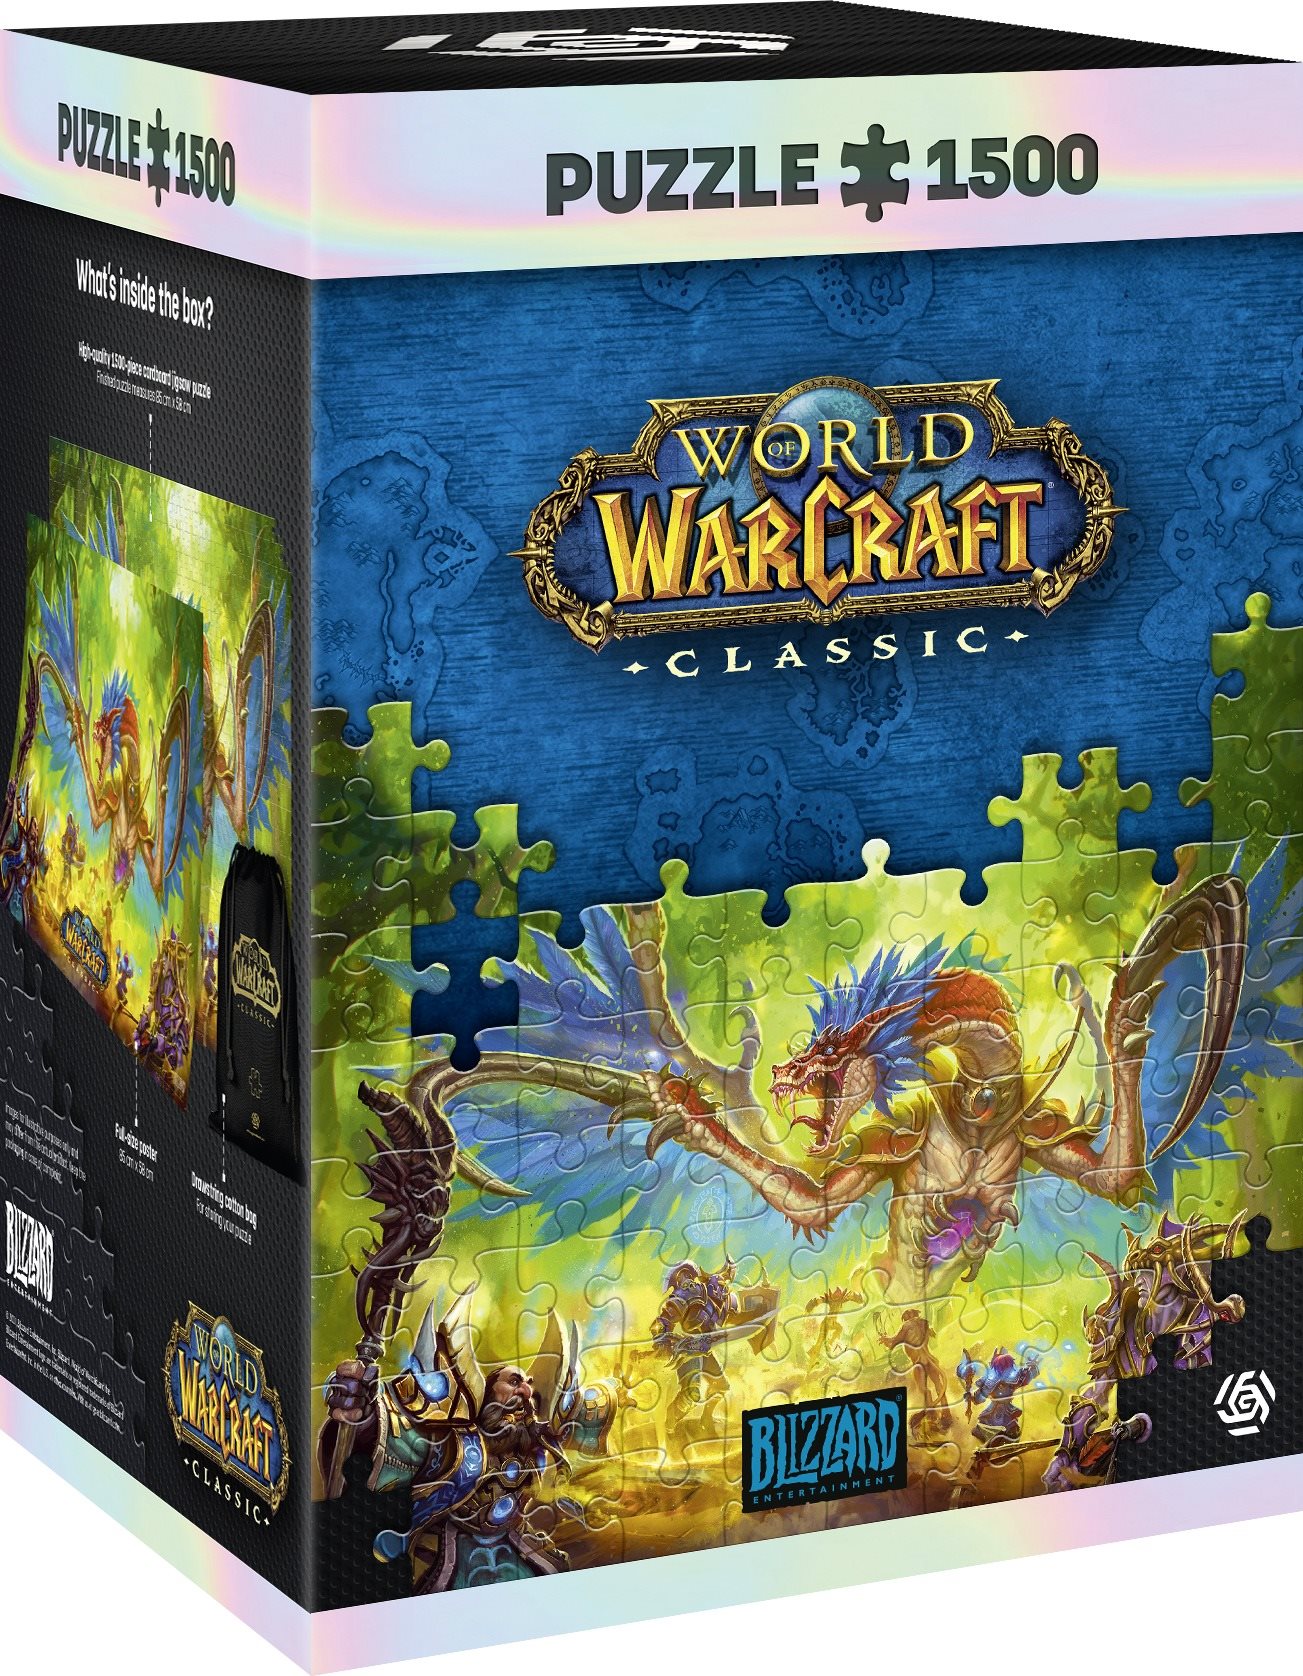 Puzzle World of Warcraft Classic: Zul Gurub - Puzzle